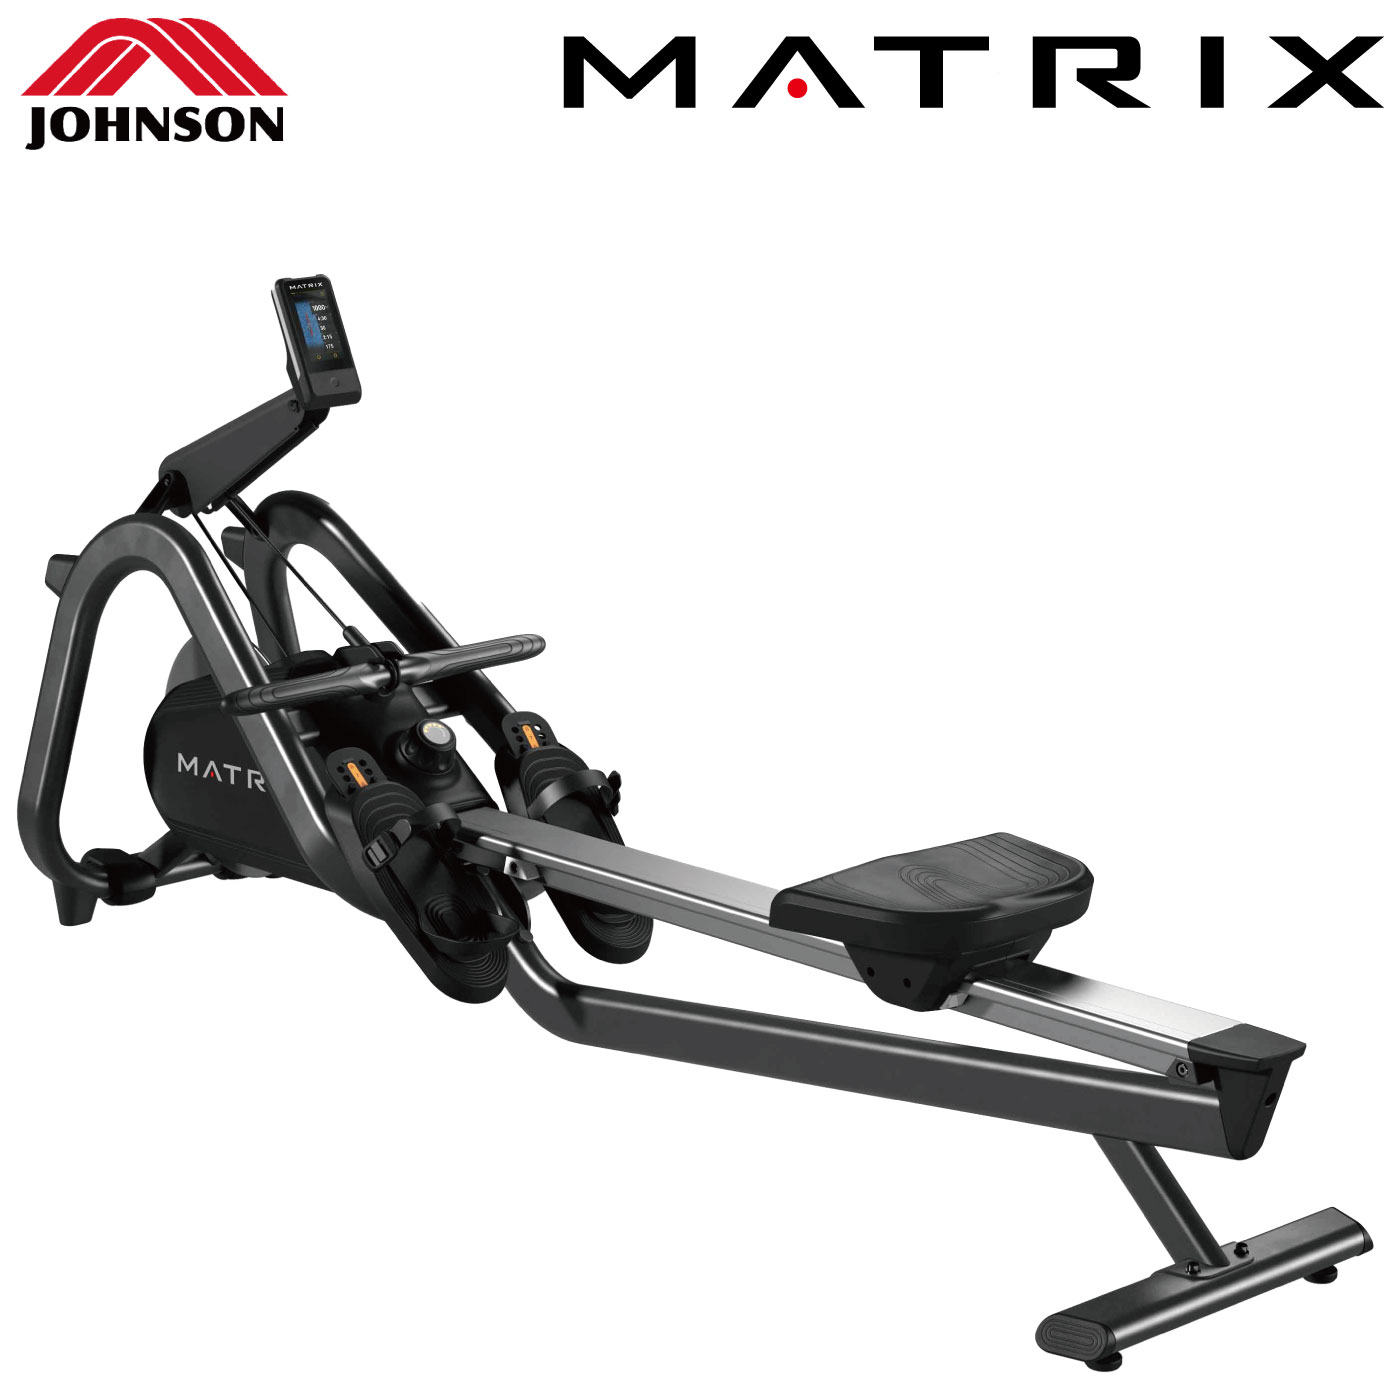 RXP-Rower（ローアー）／ローイングマシン〈業務用MATRIX